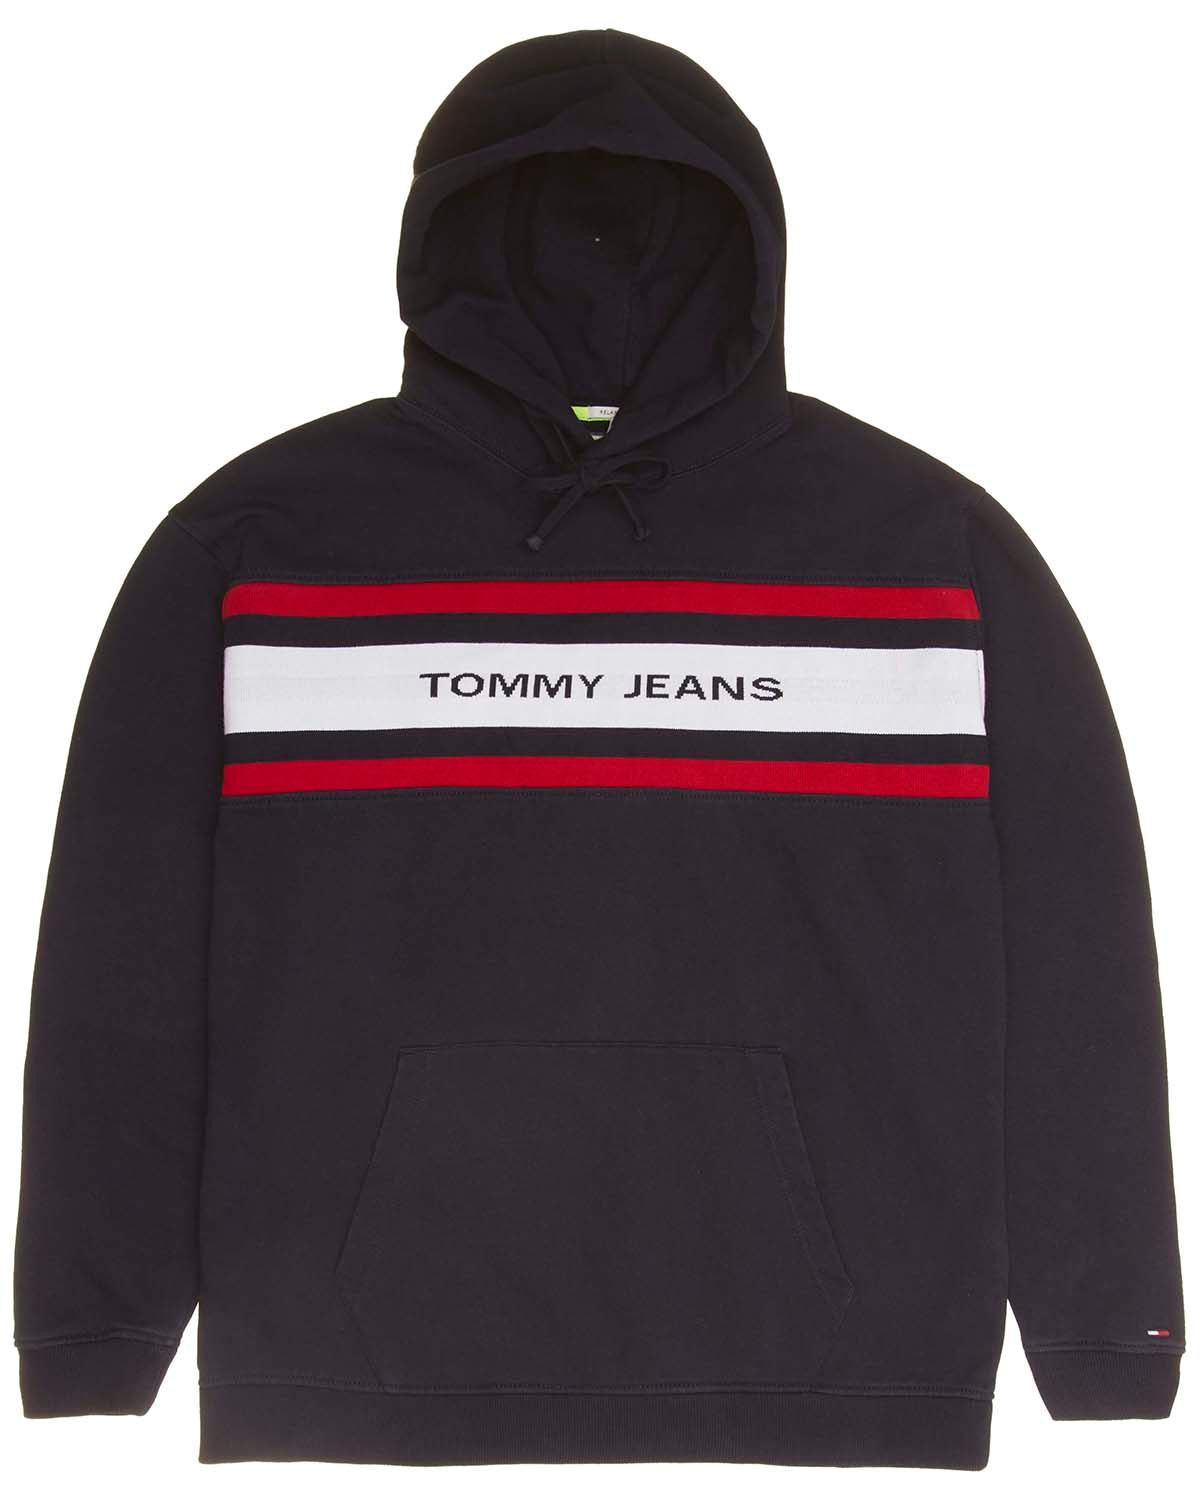 Men's Tommy Jeans Cotton Hoody